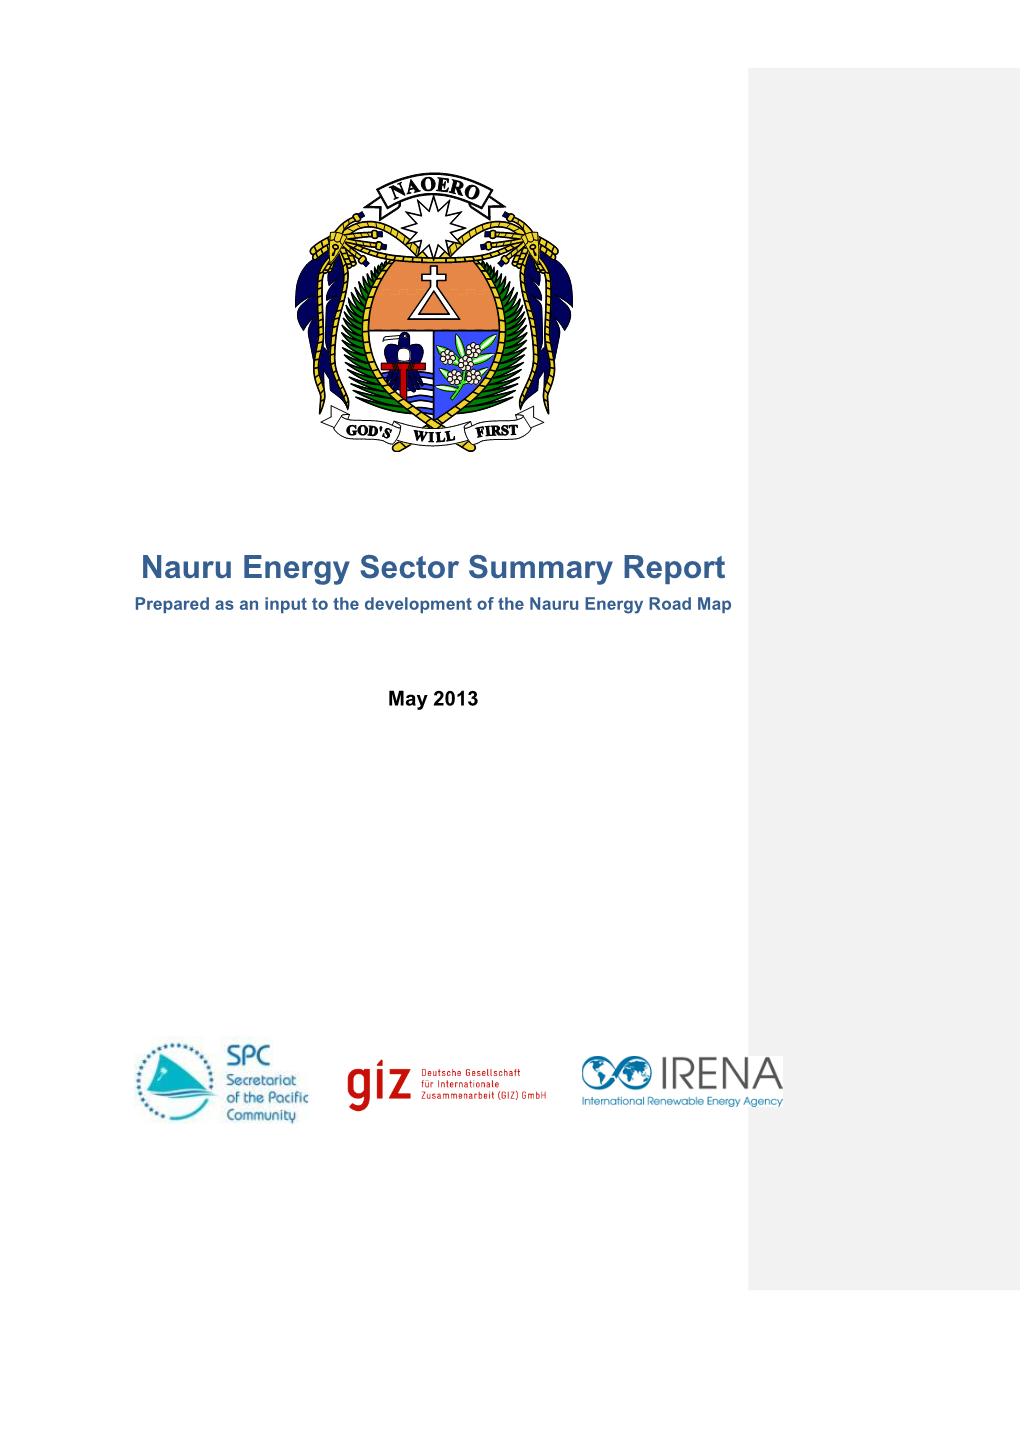 Nauru Energy Sector Summary Report Prepared As an Input to the Development of the Nauru Energy Road Map